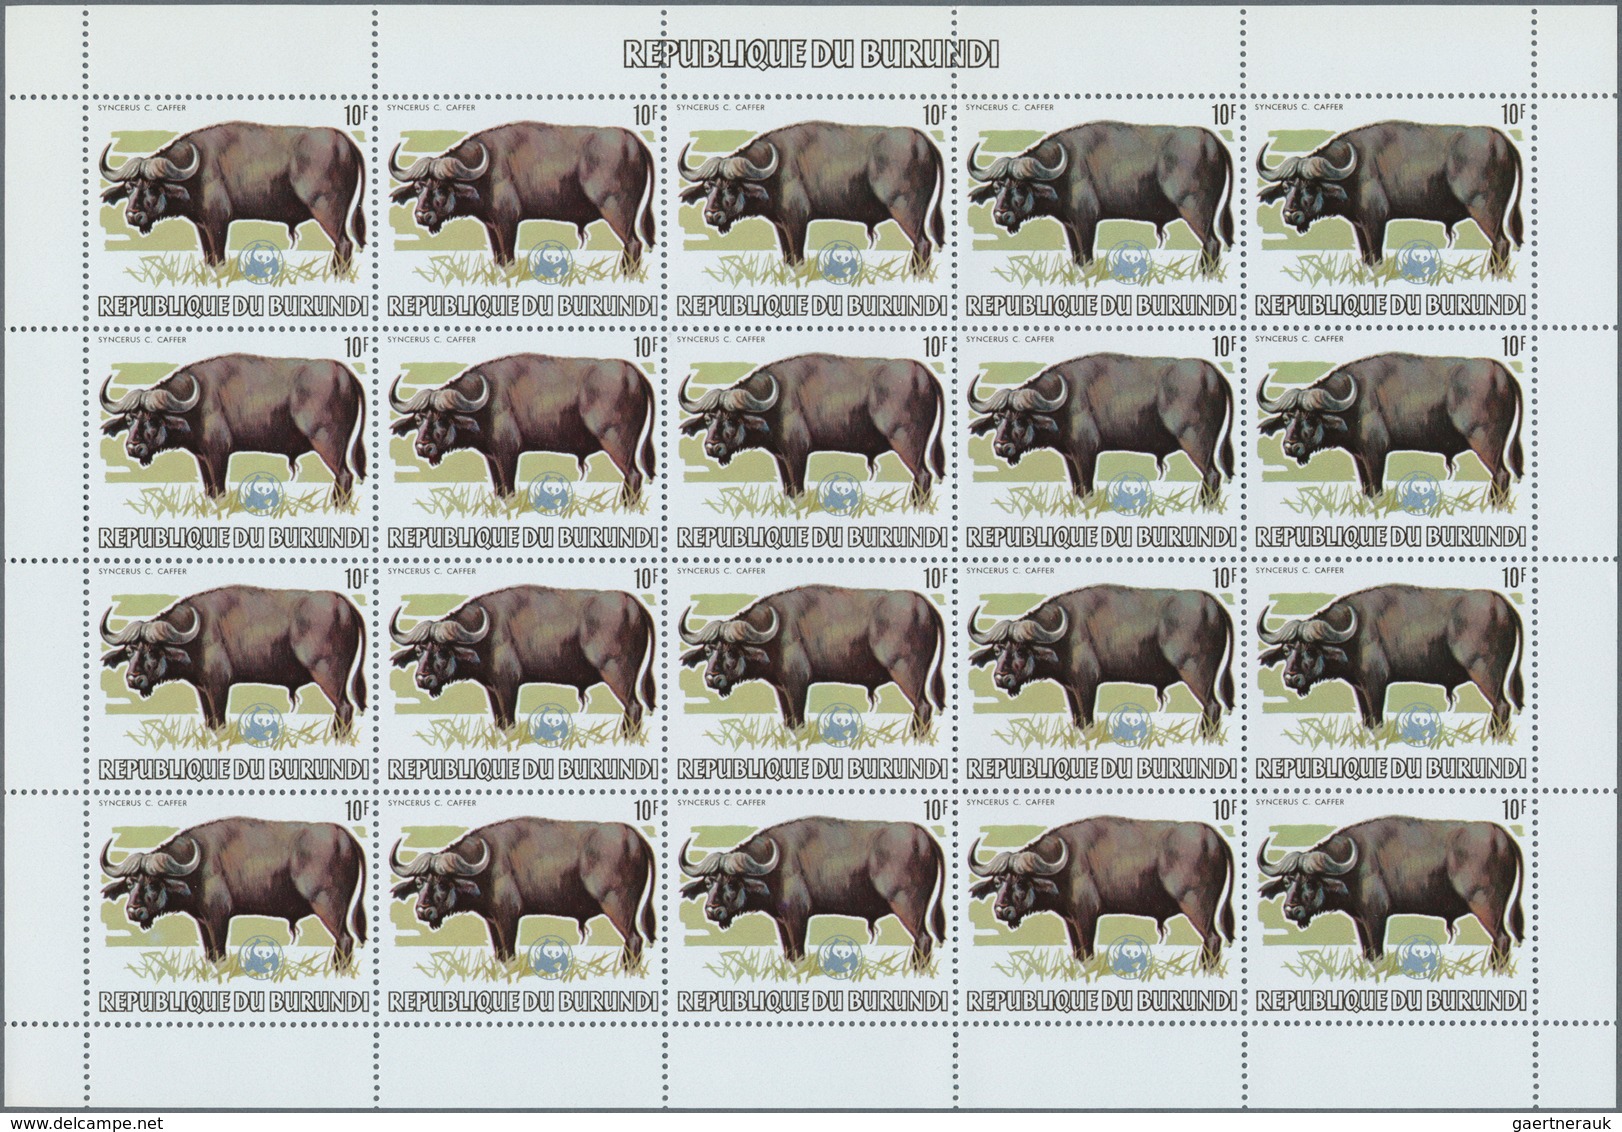 Thematik: WWF: 1982, BURUNDI: African Wildlife complete set of 13 from 2fr. to 85fr. (Lion, Giraffe,